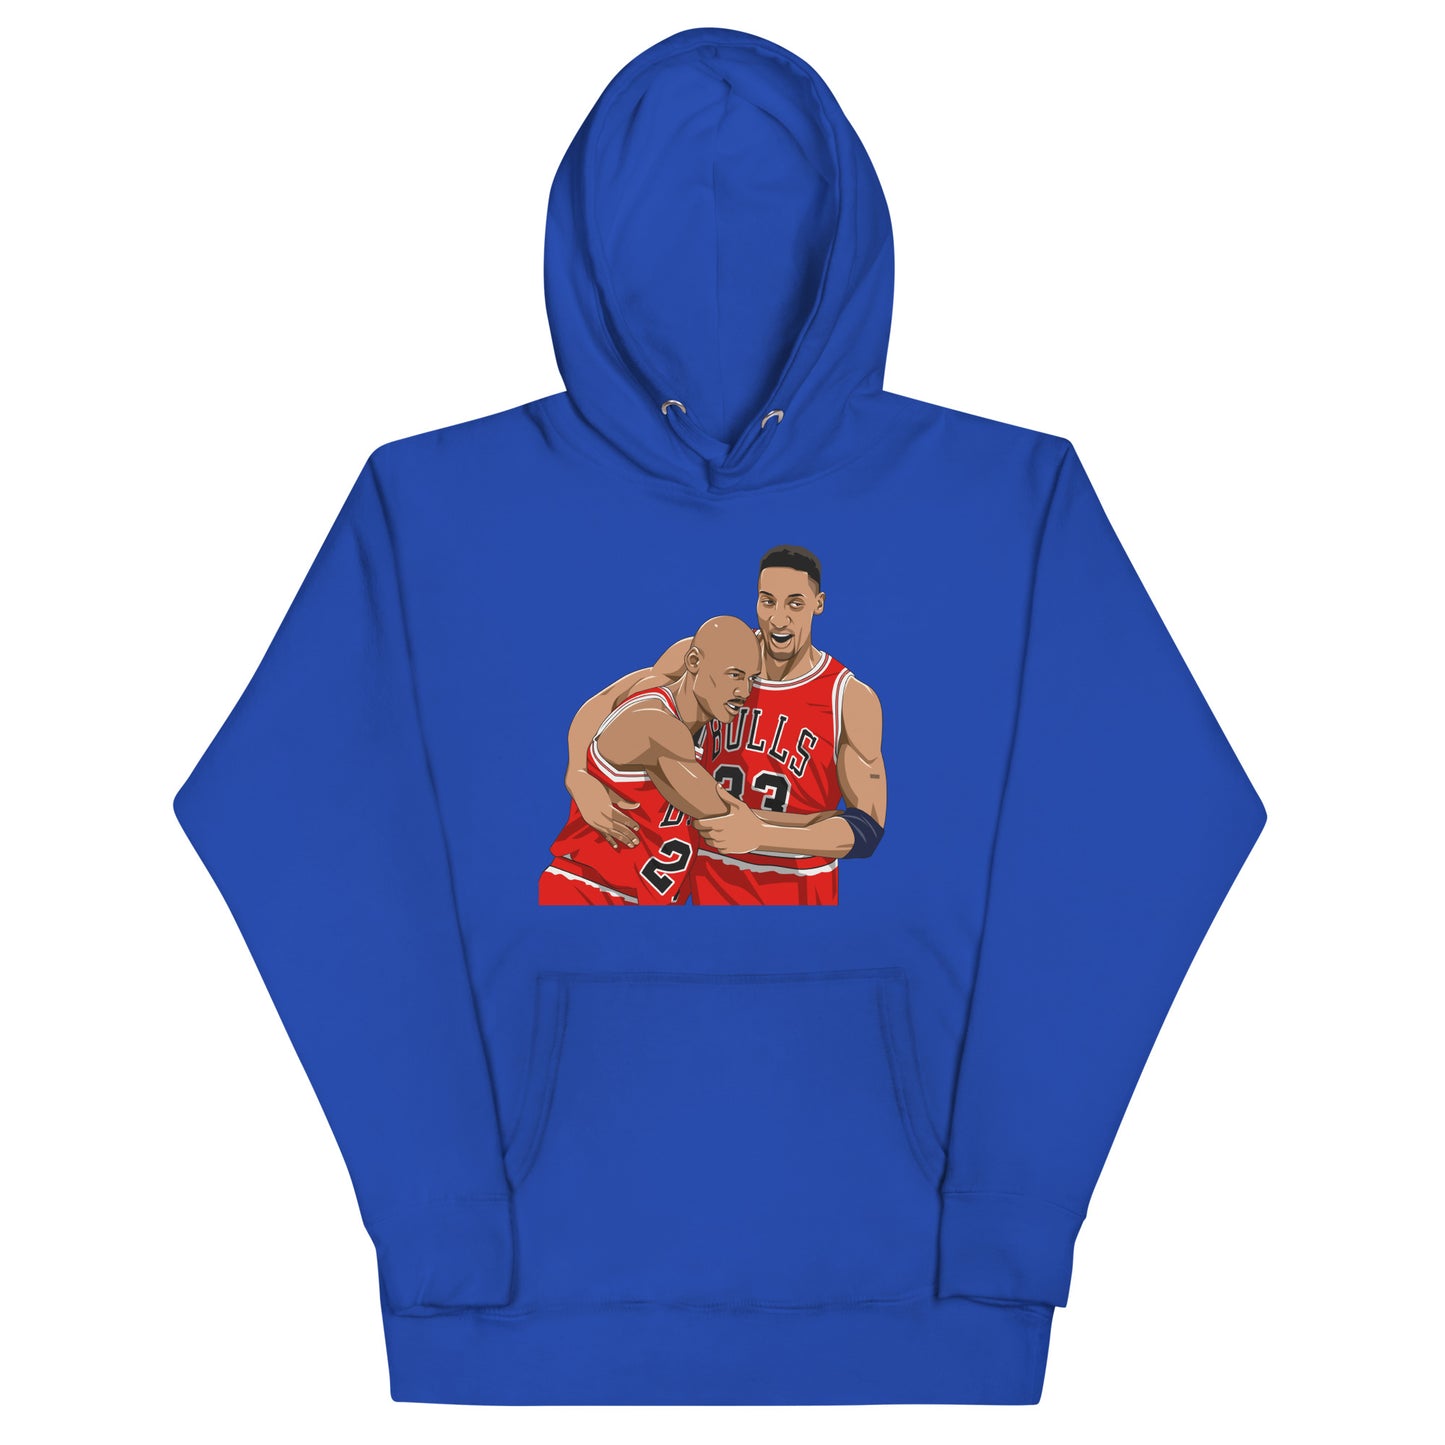 Michael Jordan and Scottie Pippen - "Flu Game" hoodie